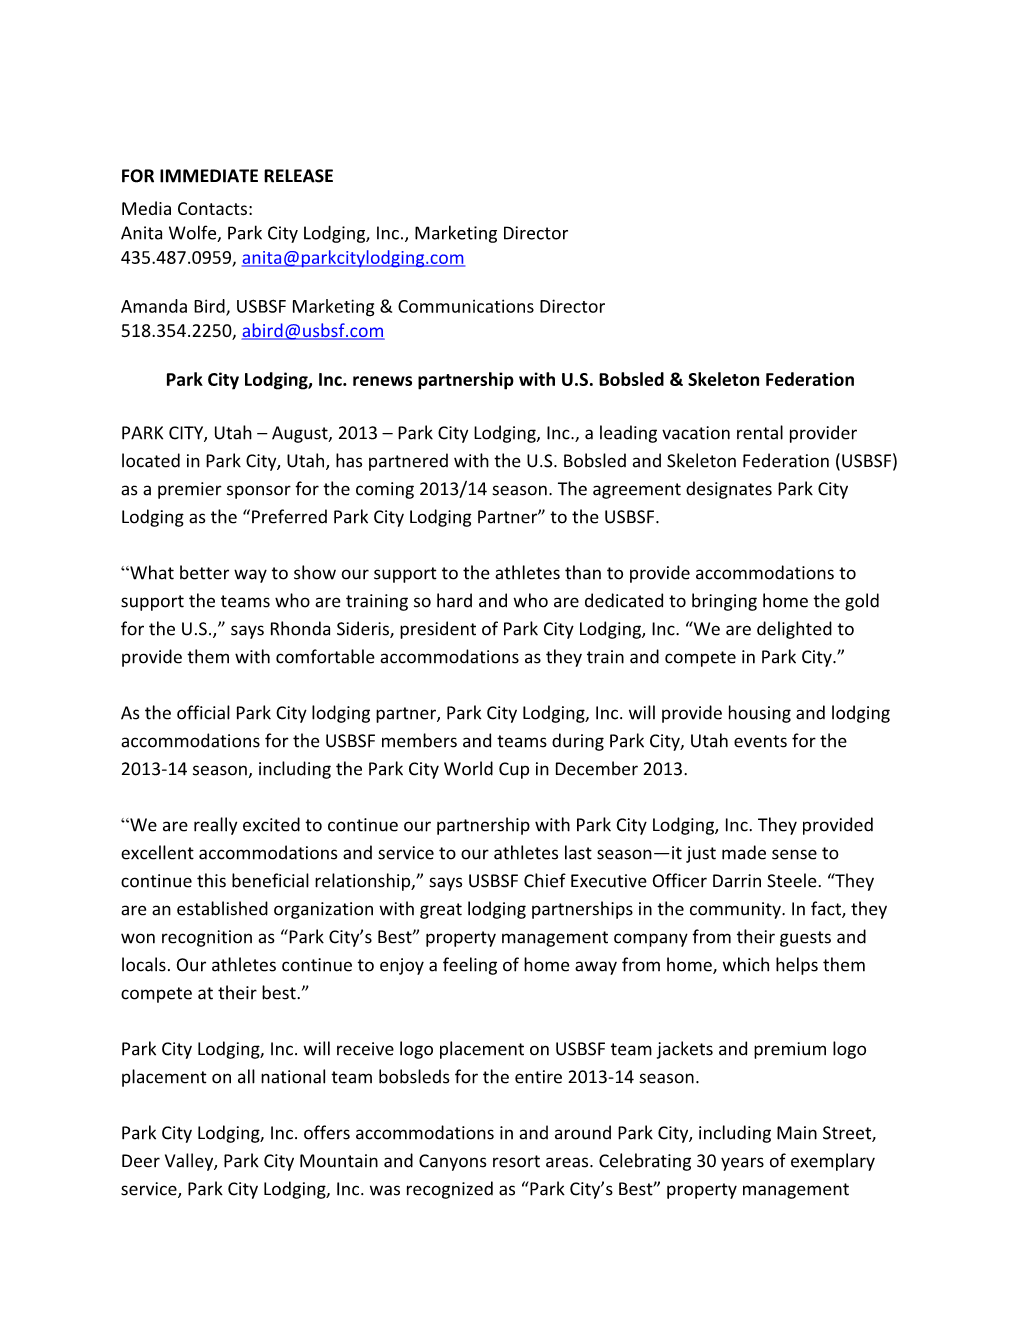 Park City Lodging, Inc. Renews Partnership with U.S. Bobsled & Skeleton Federation